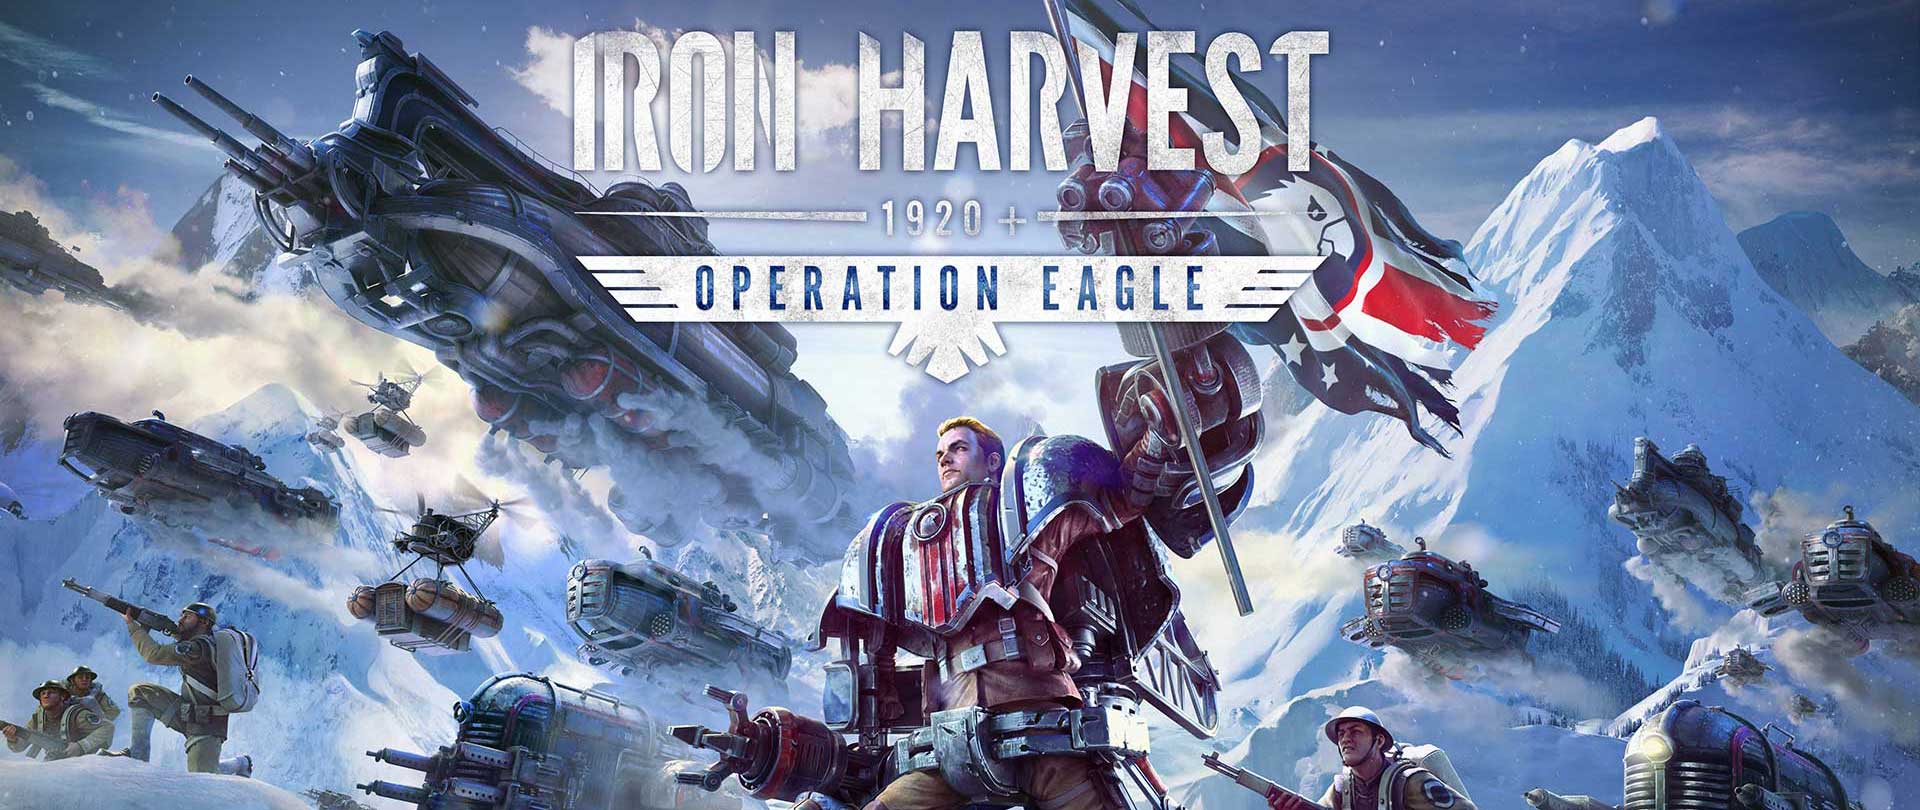 Iron Harvest 1920+: Operation Eagle – Análisis PC